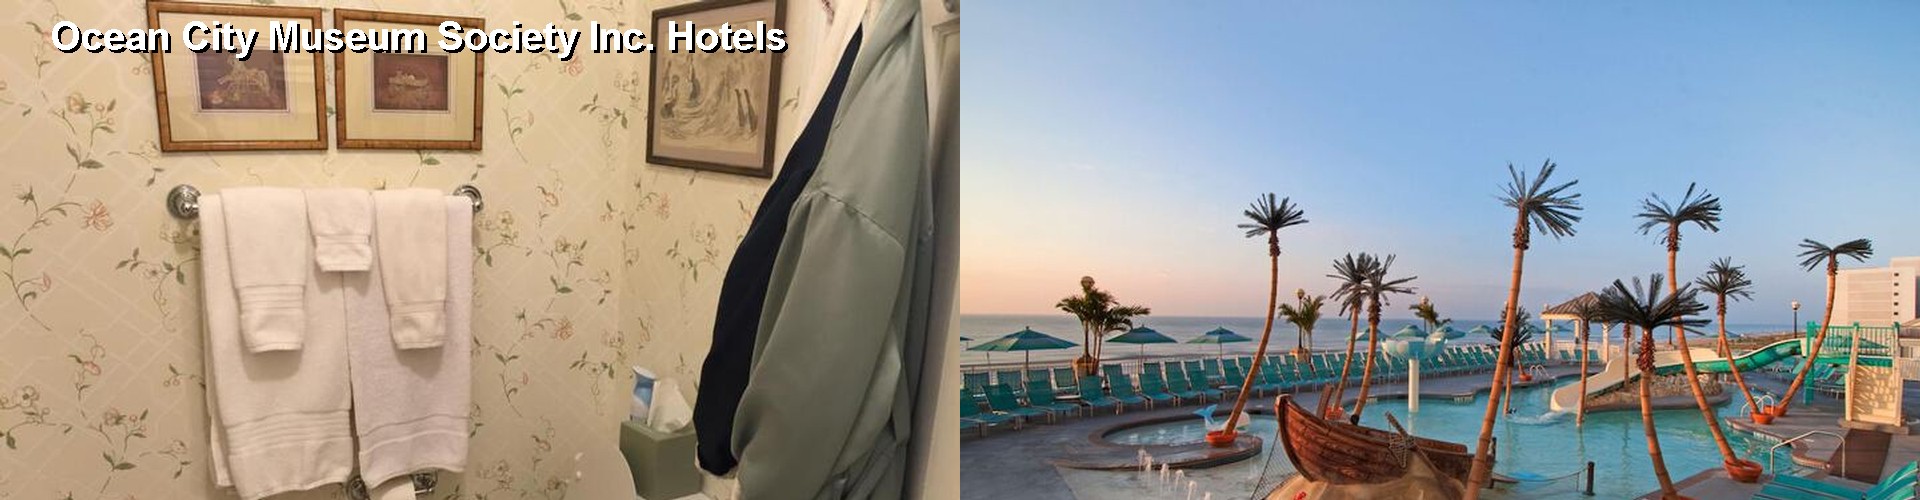 3 Best Hotels near Ocean City Museum Society Inc.